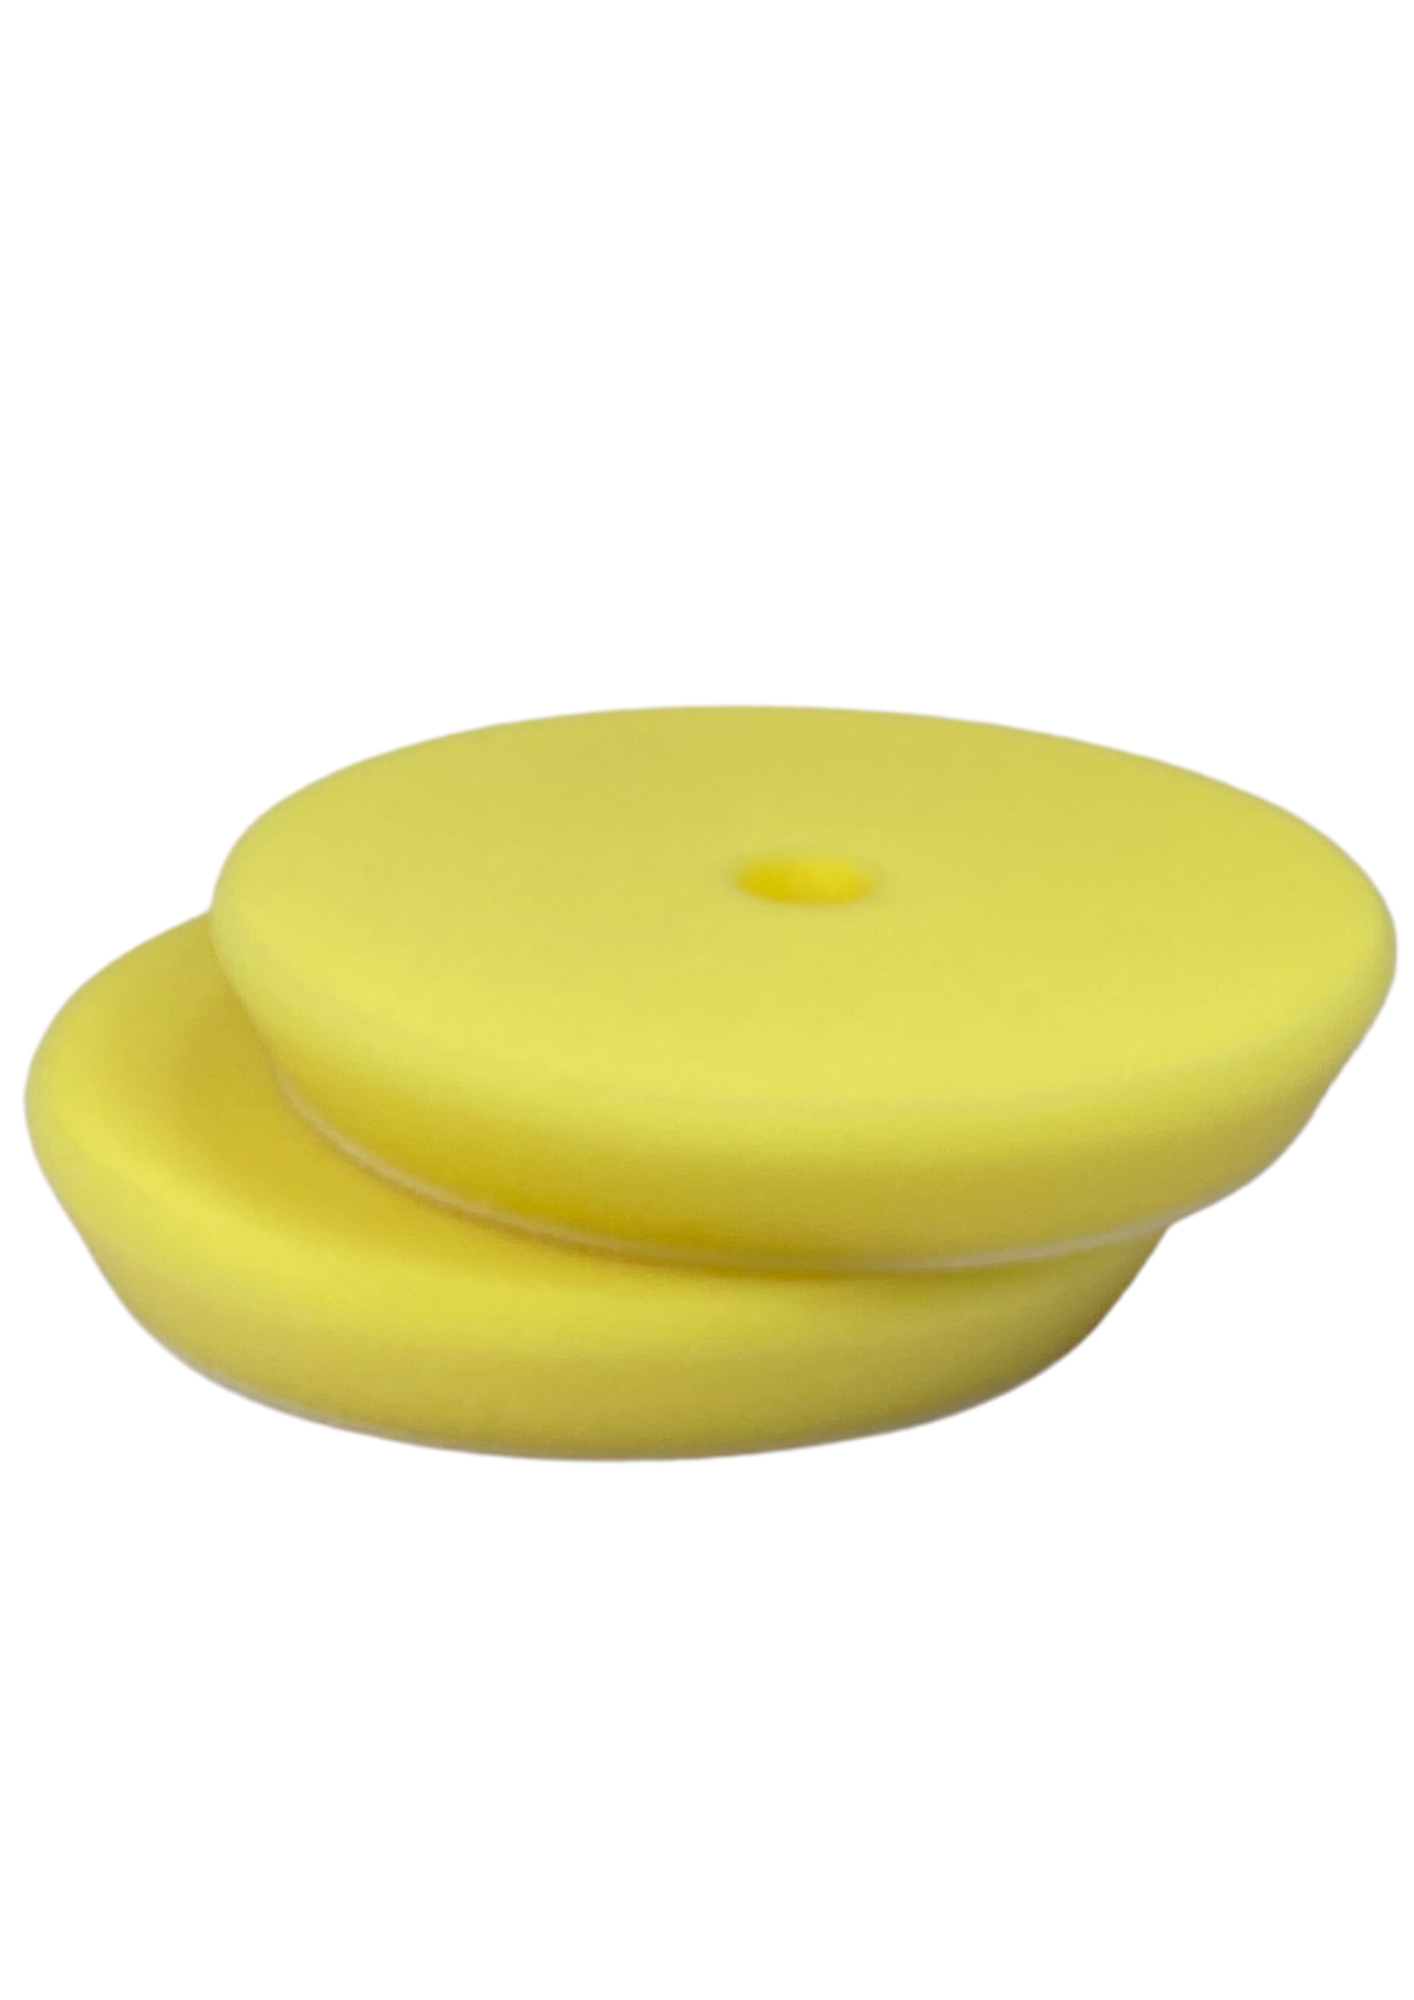 INNOKEM Foam Pad Yellow Medium Laikka 175x25 mm